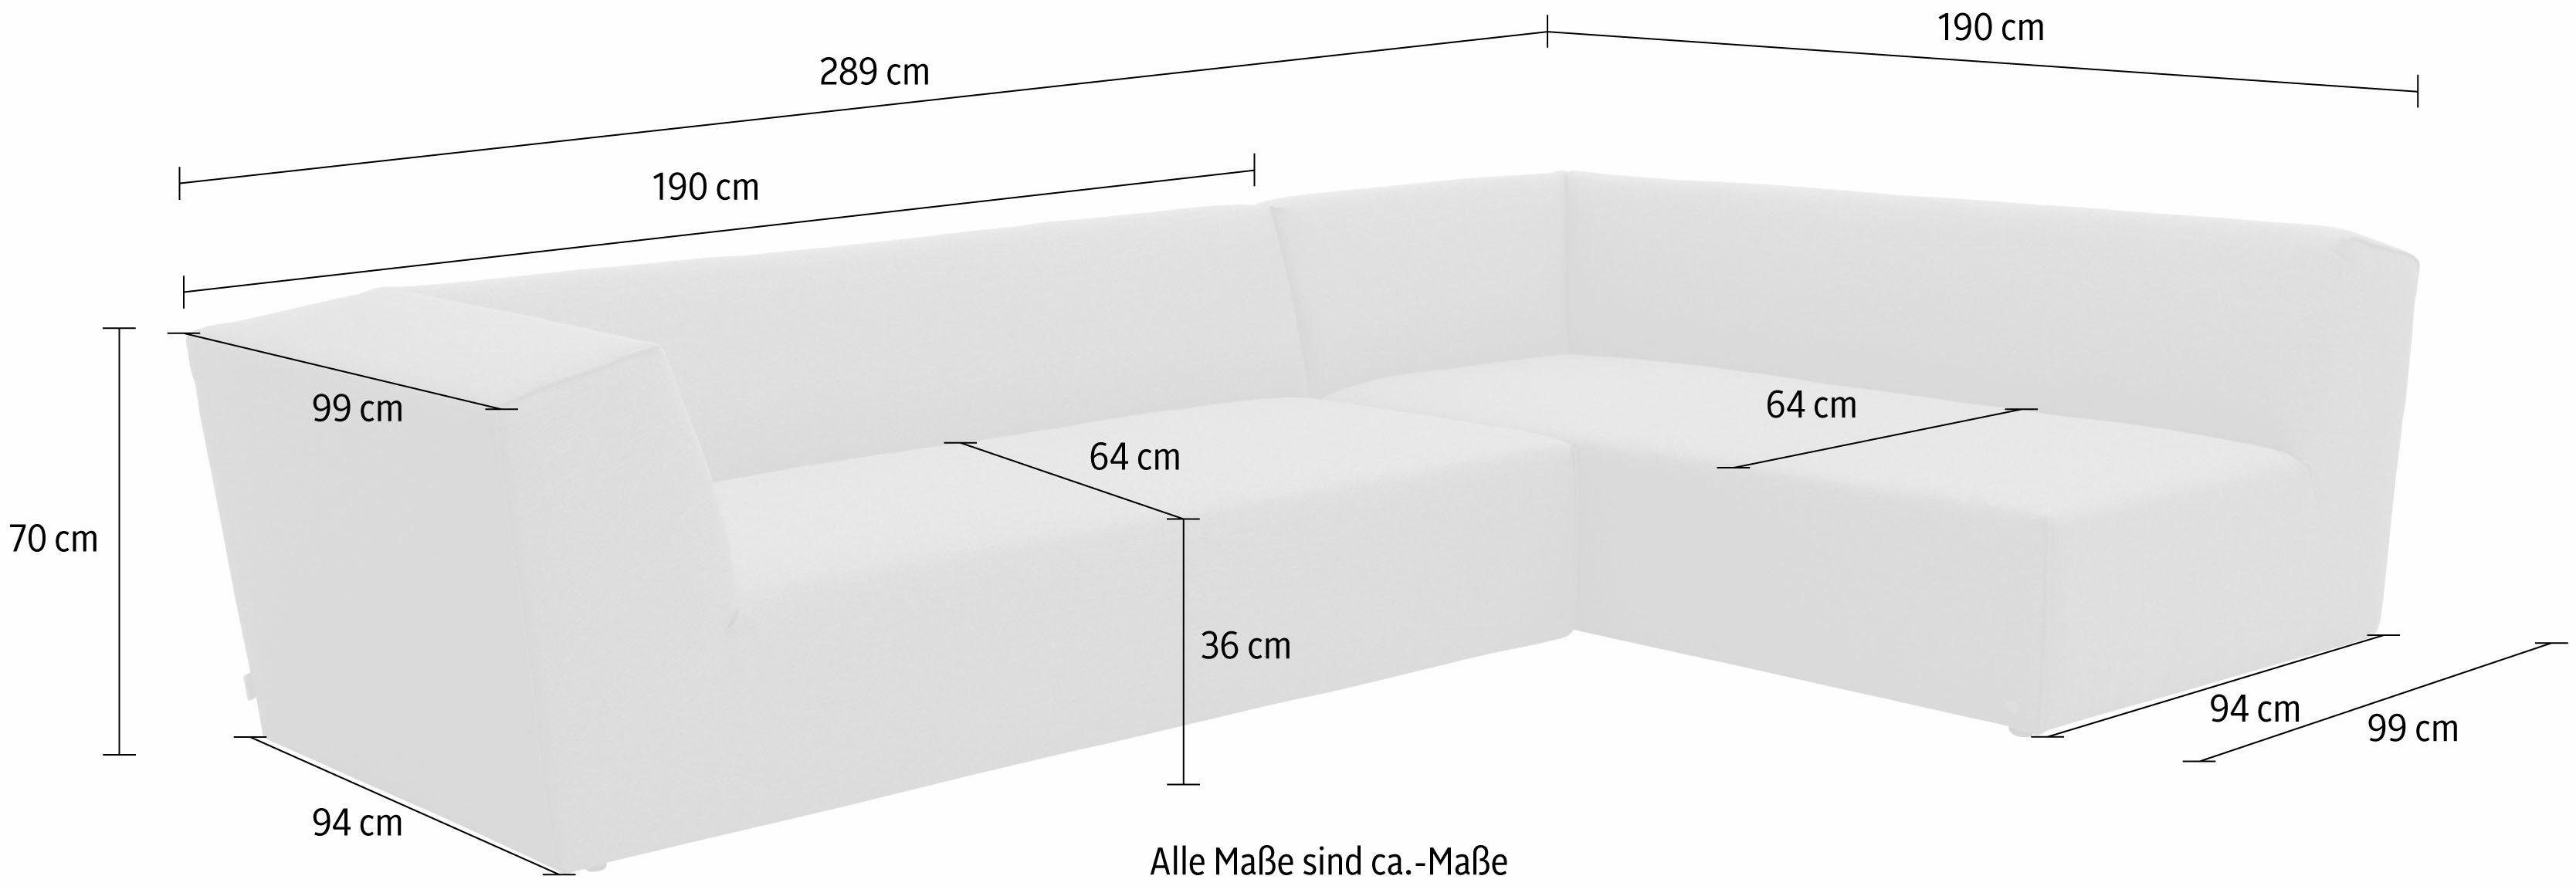 Sofa-Eckelementen, TOM rechts Ecksofa mint 2 TBO ELEMENTS, TAILOR aus HOME 53 Set, mane